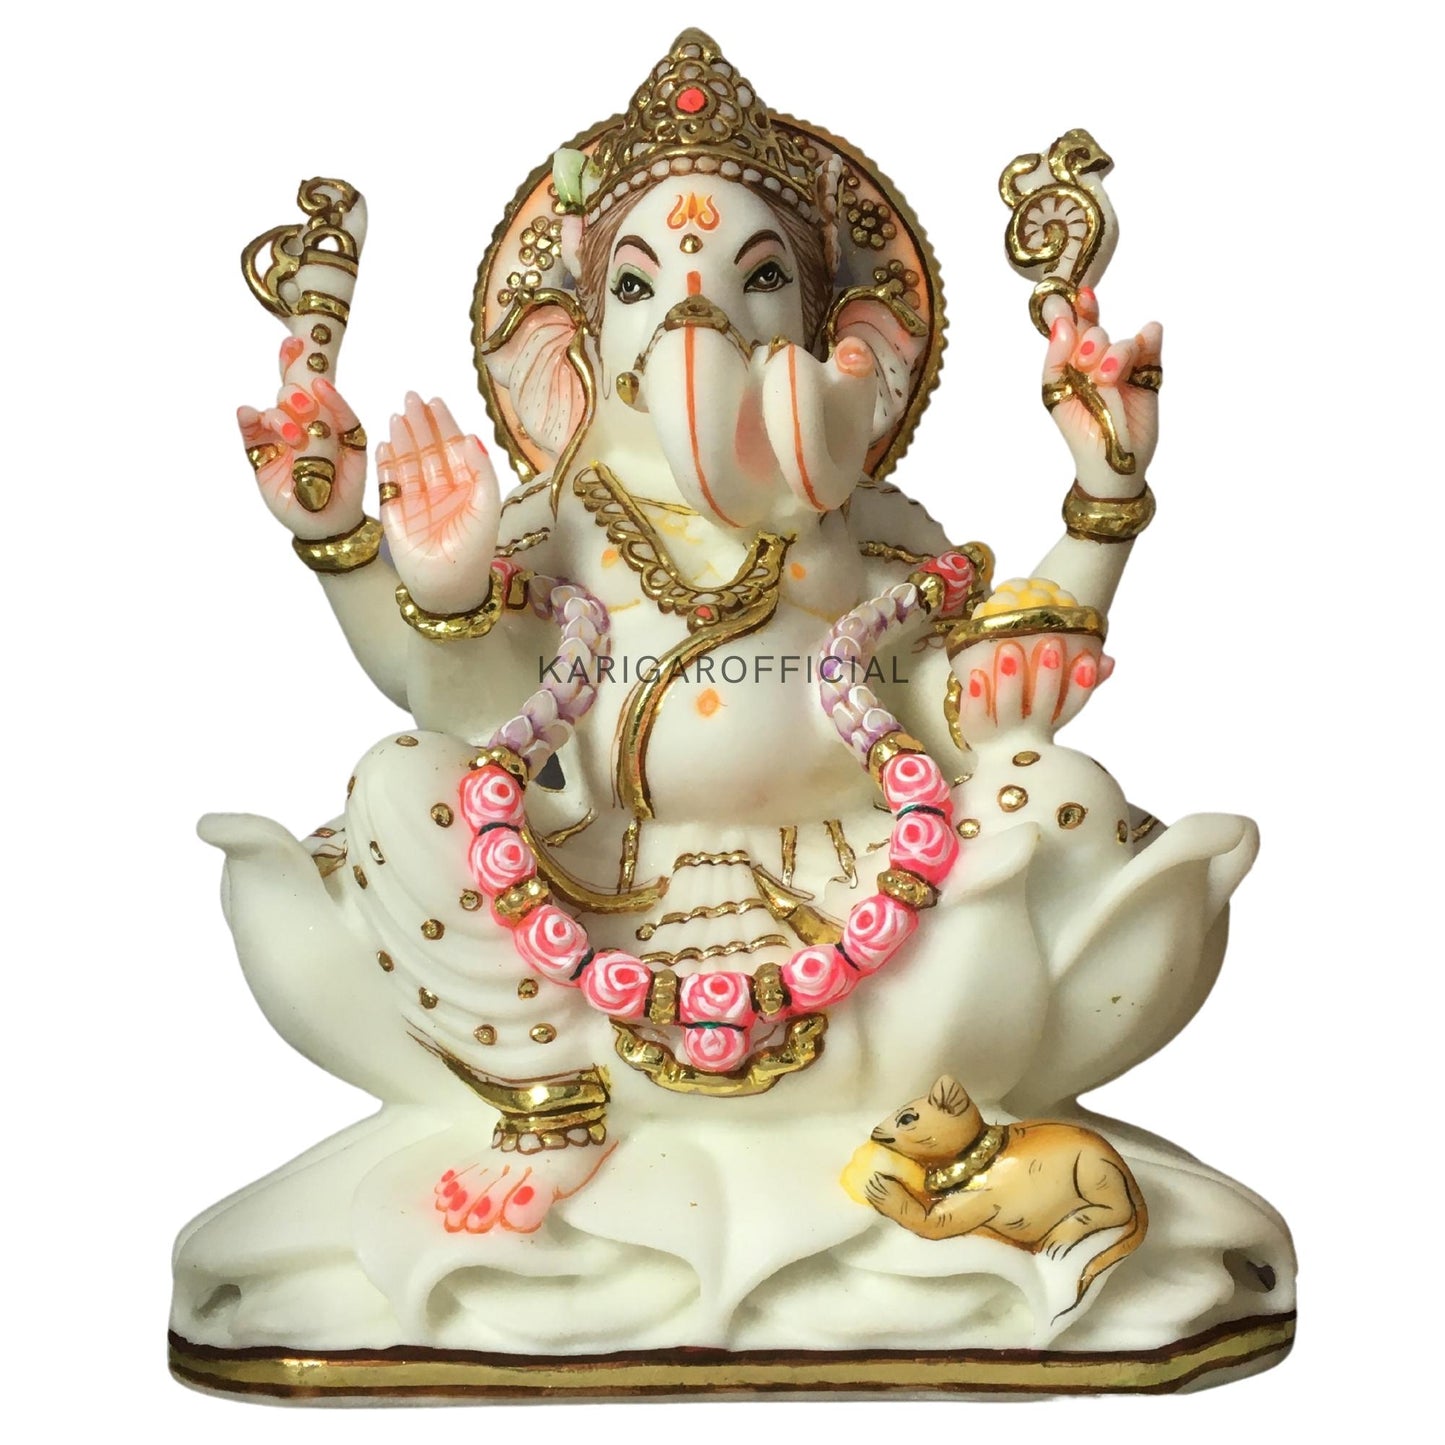 Ganesha Murti Statue, Large 12 inches White Marble Ganpati Figurine, Gold leaf Work Vinayak Deity Ganesha Statue Marble, Big White Elephant Head God Idol Home Decor Gift Sculpture Home First Ganesha